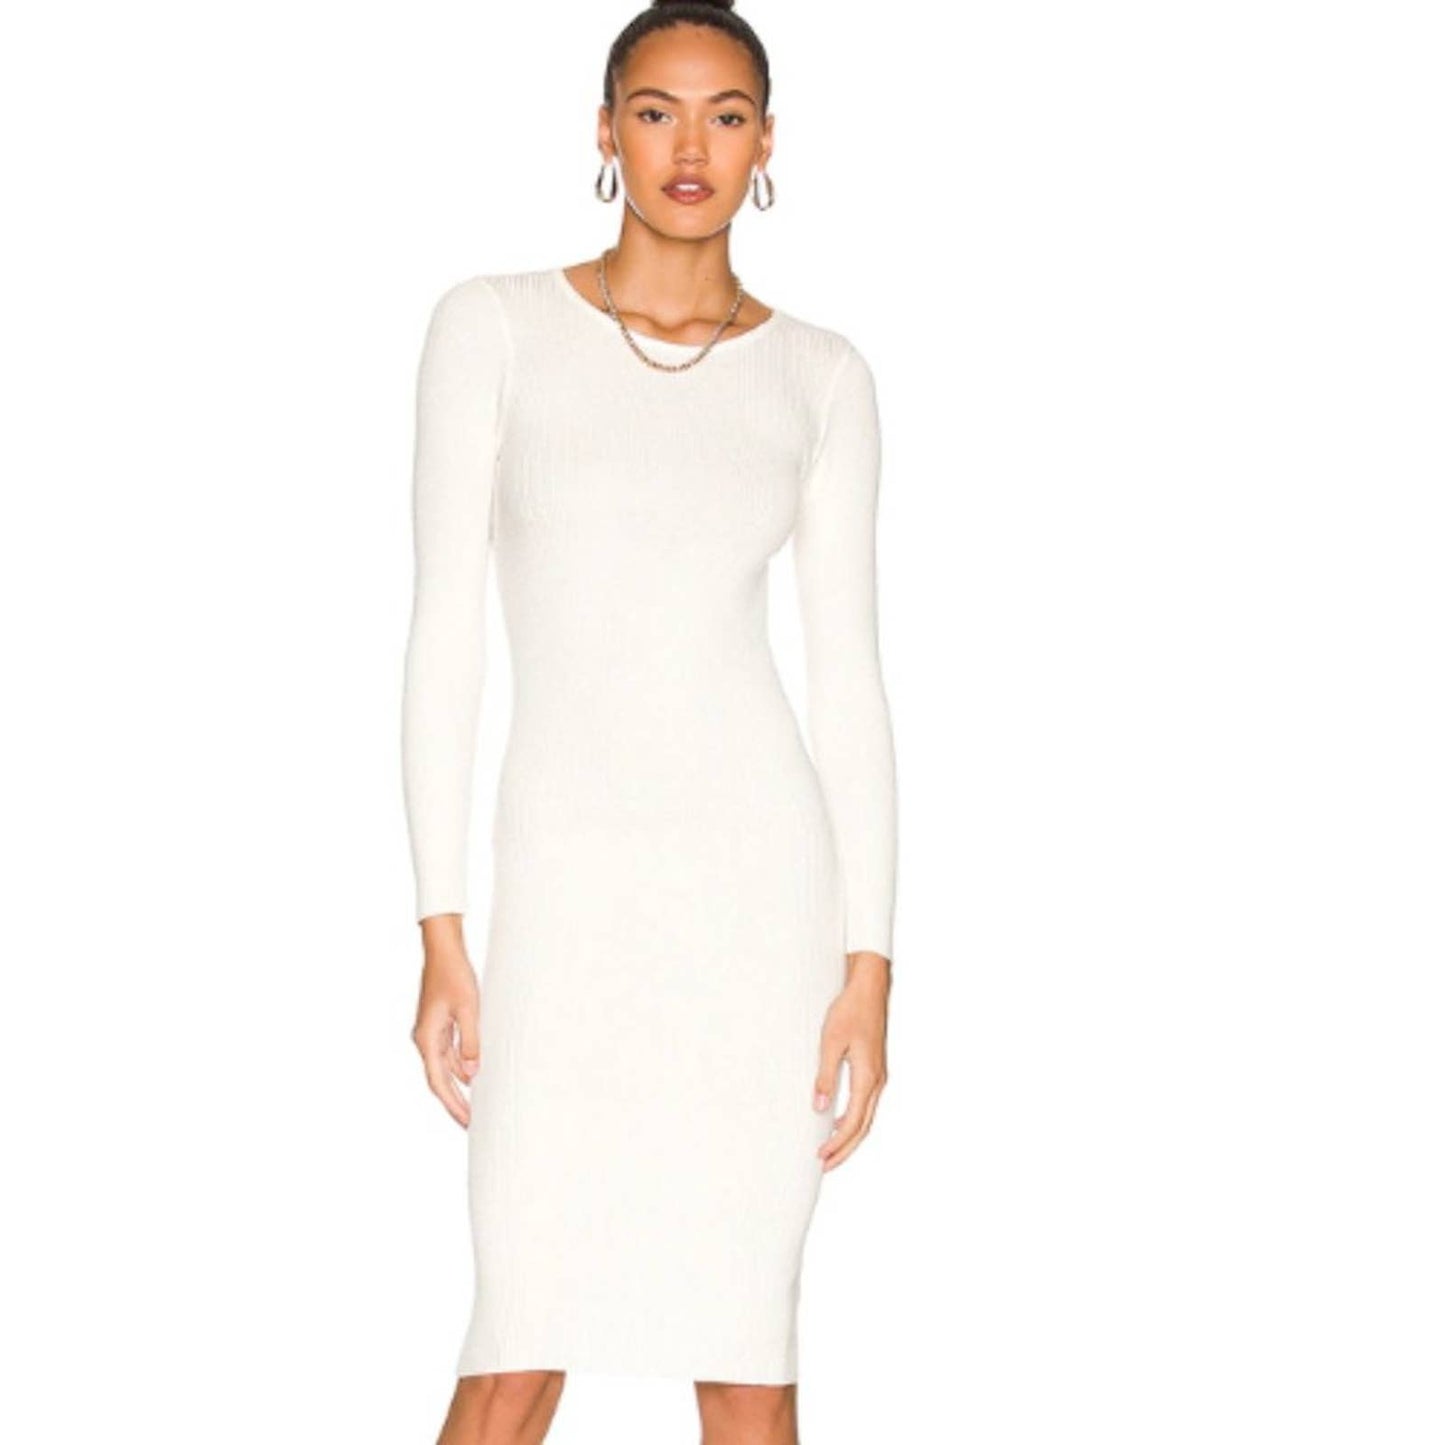 ALL THE WAYS Makena Midi Dress in White NWT Size Small